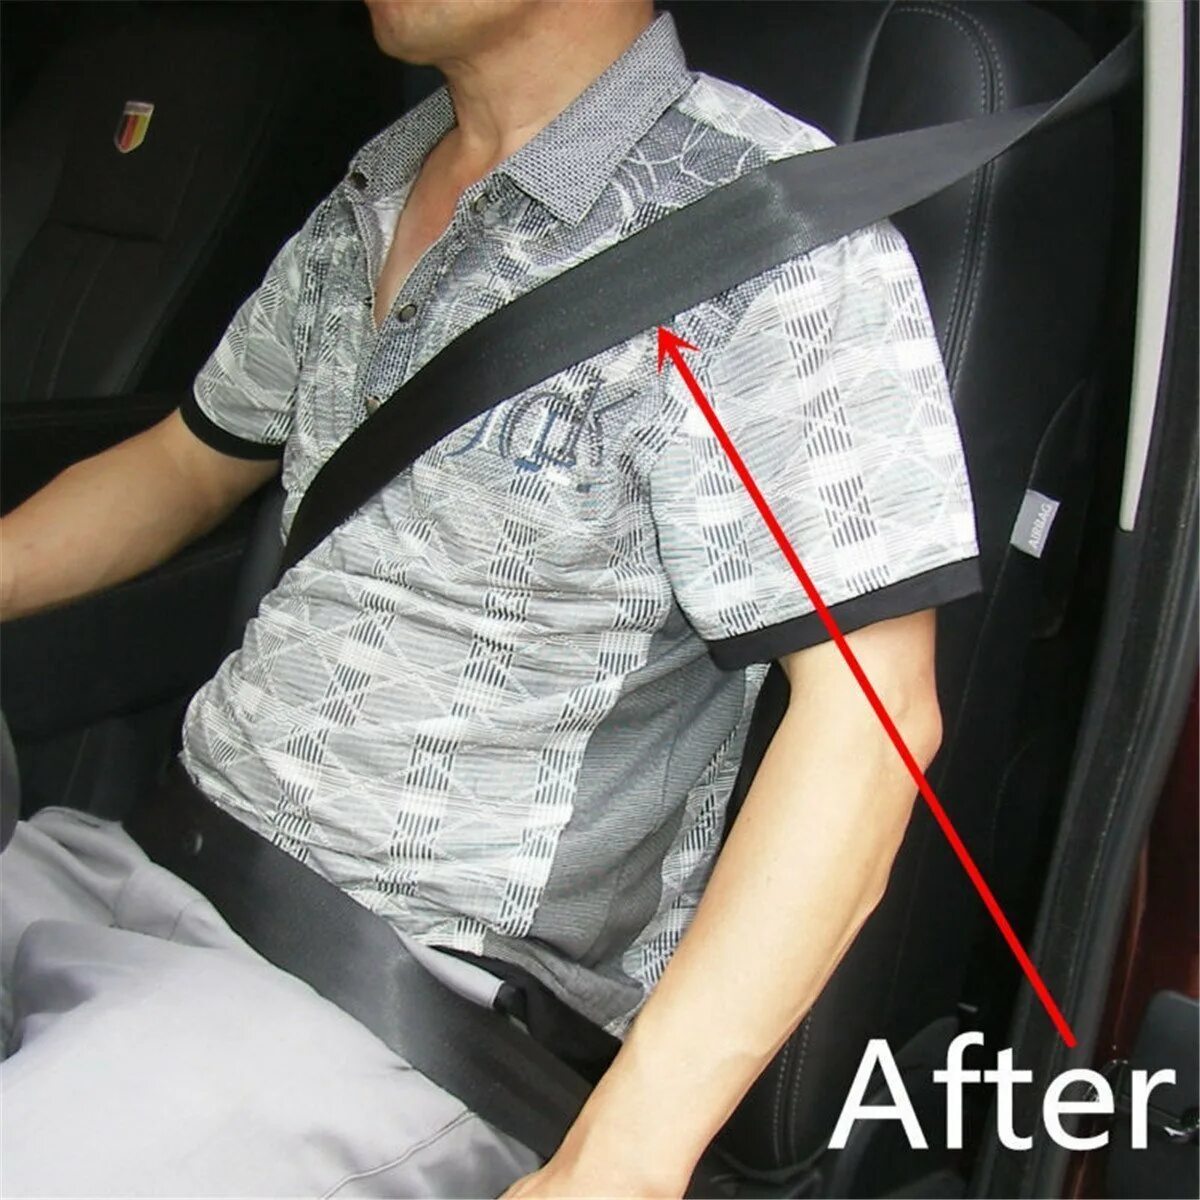 Ремни безопасности после аварии. Seat Belt. Ремень безопасности Smart Belt. Плечевые ремни безопасности. Сработавший ремень безопасности.